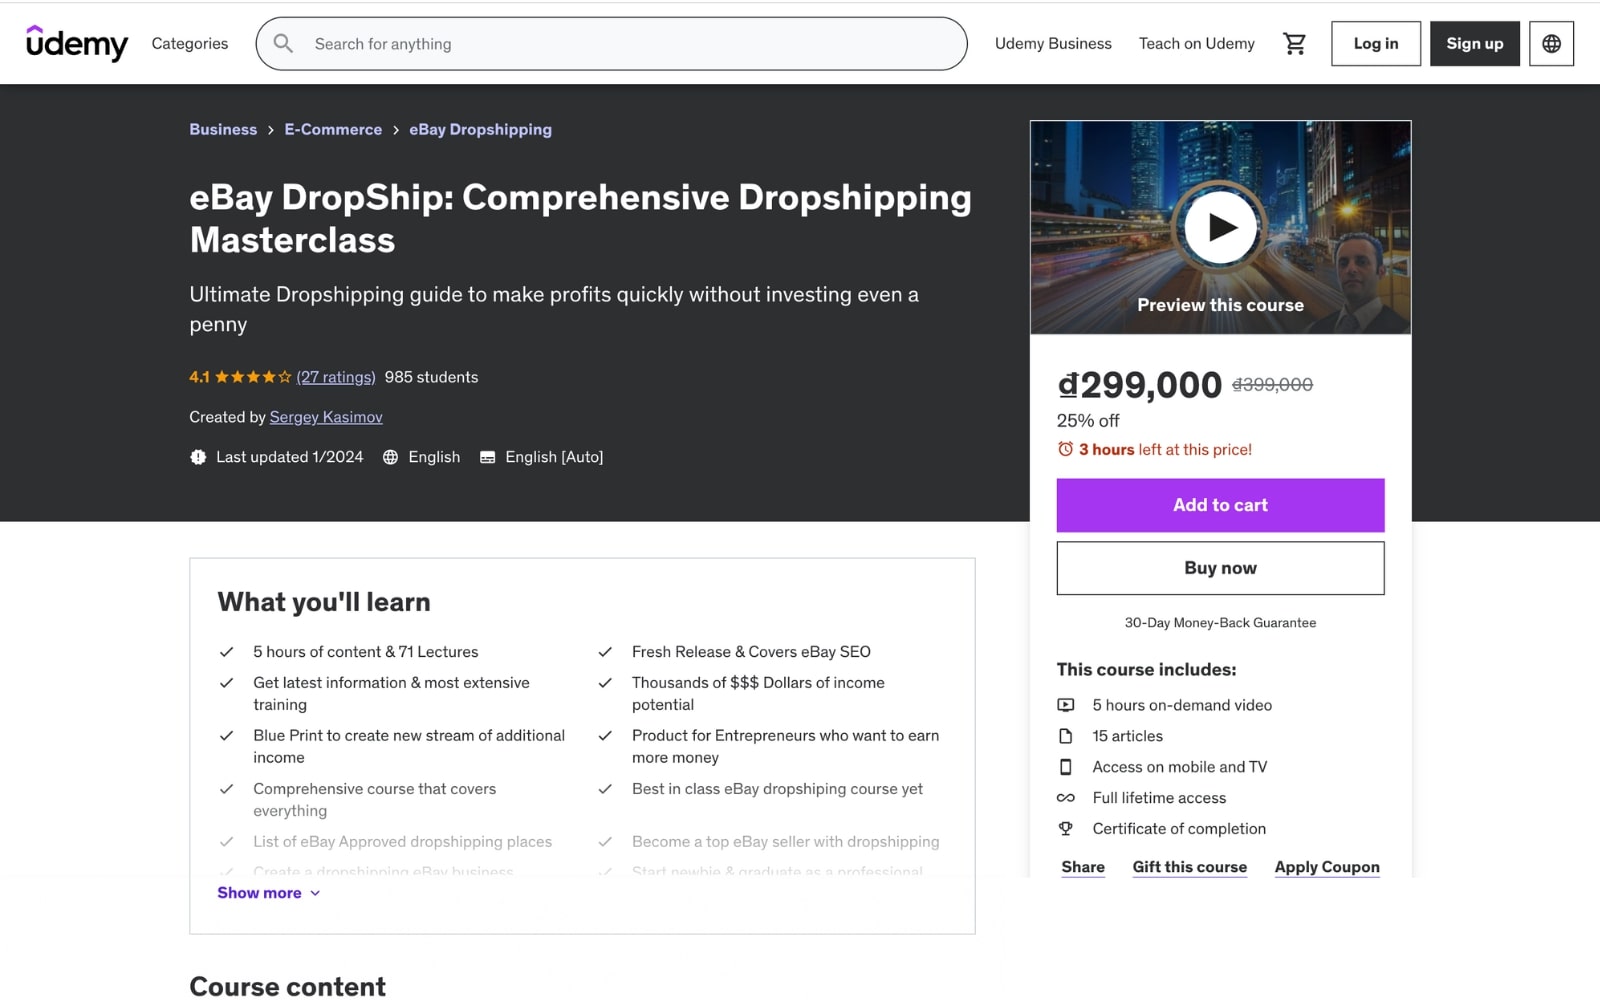 eBay DropShip: Comprehensive Dropshipping Masterclass